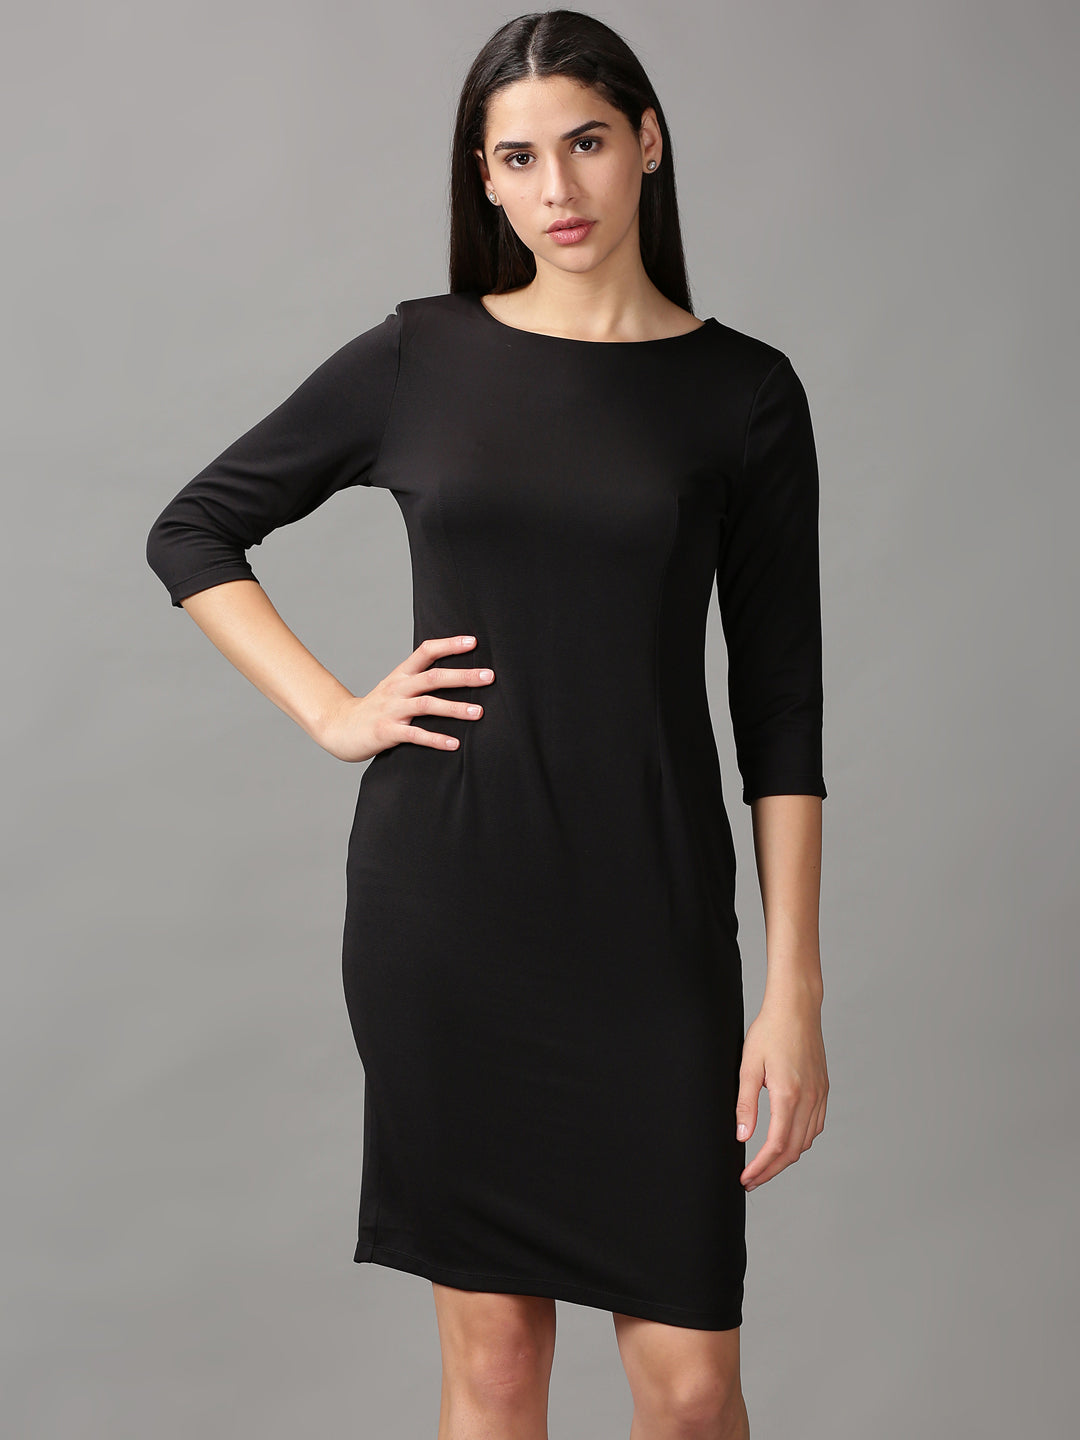 Women's Black Solid Bodycon Dress